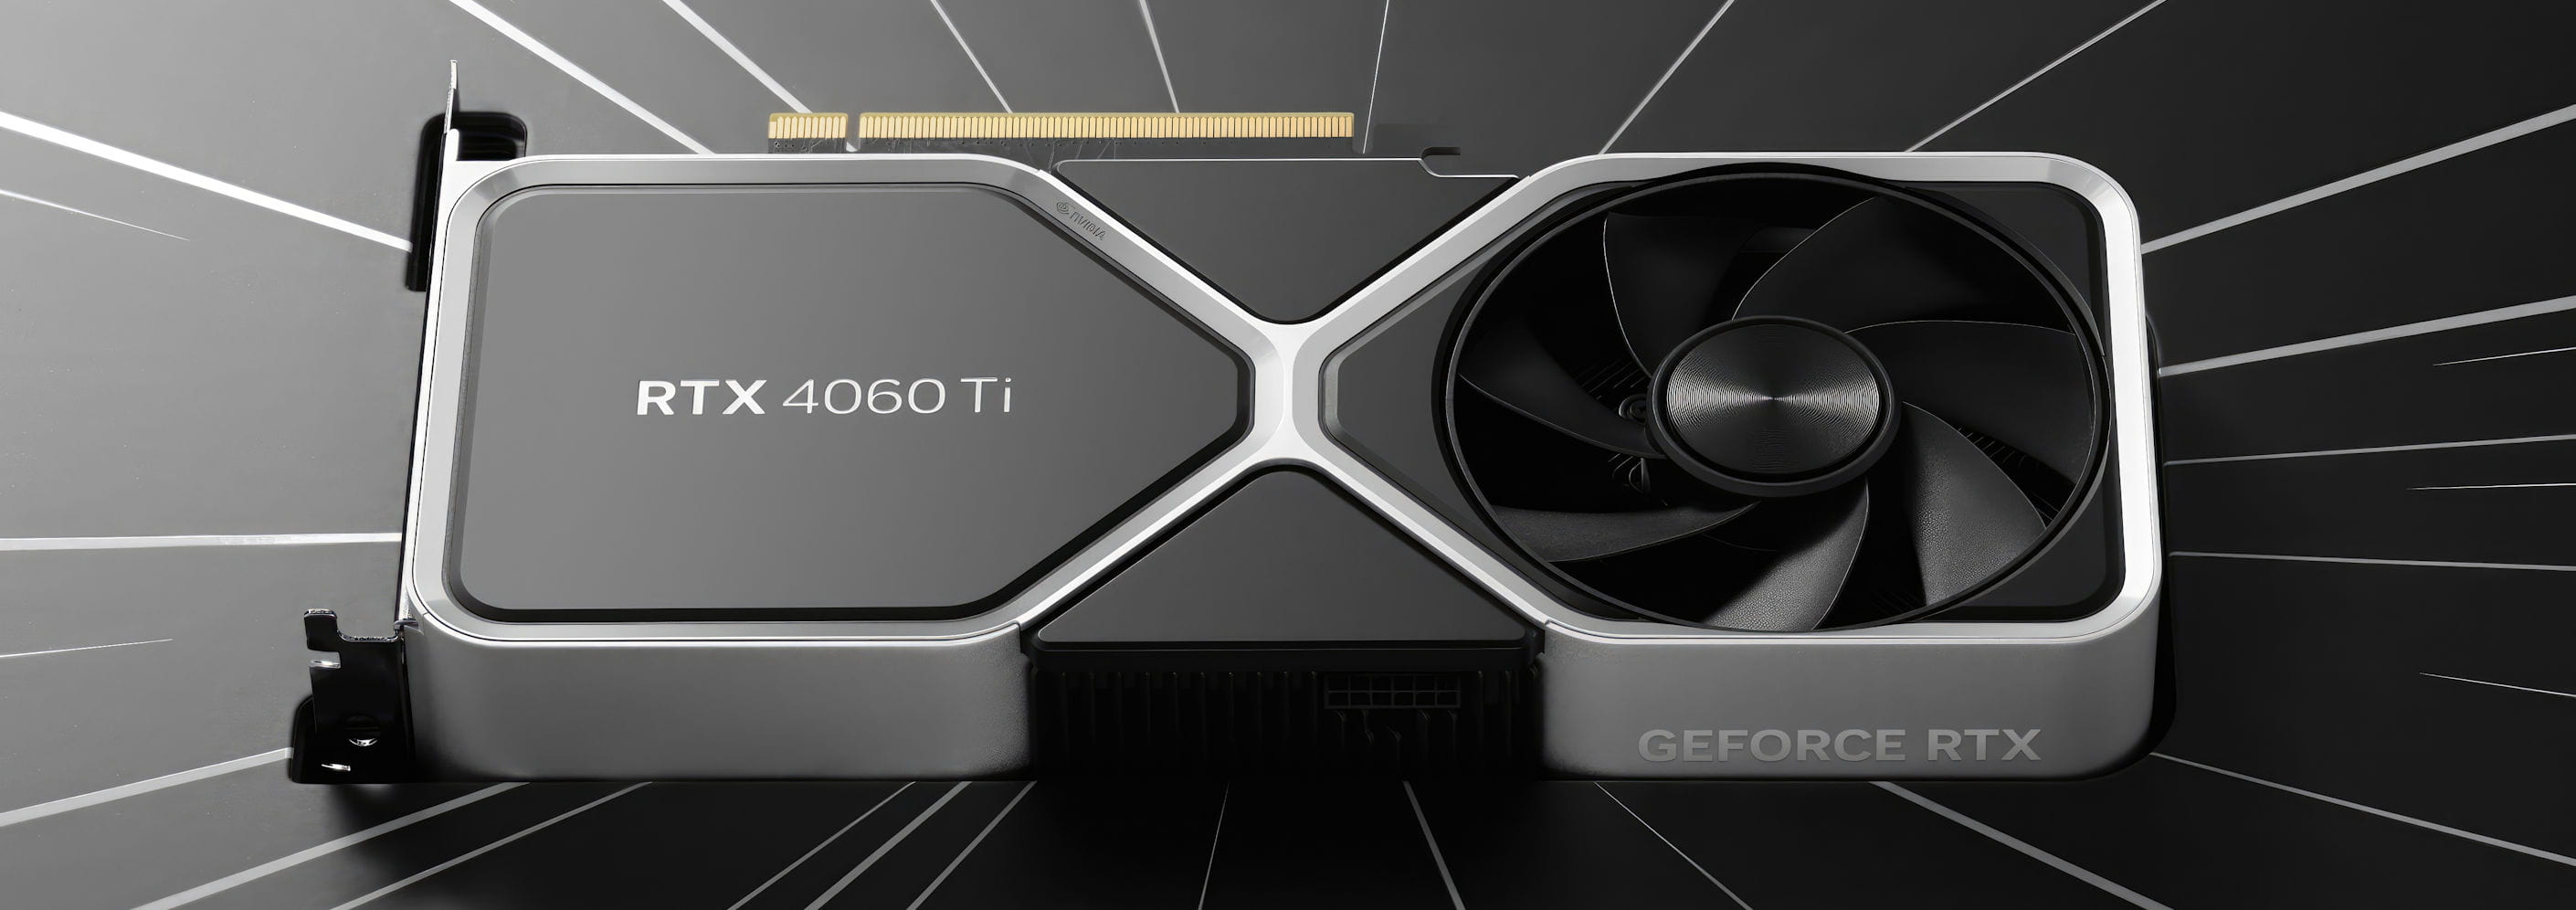 GeForce RTX 4060 Ti 8GB Founders Edition